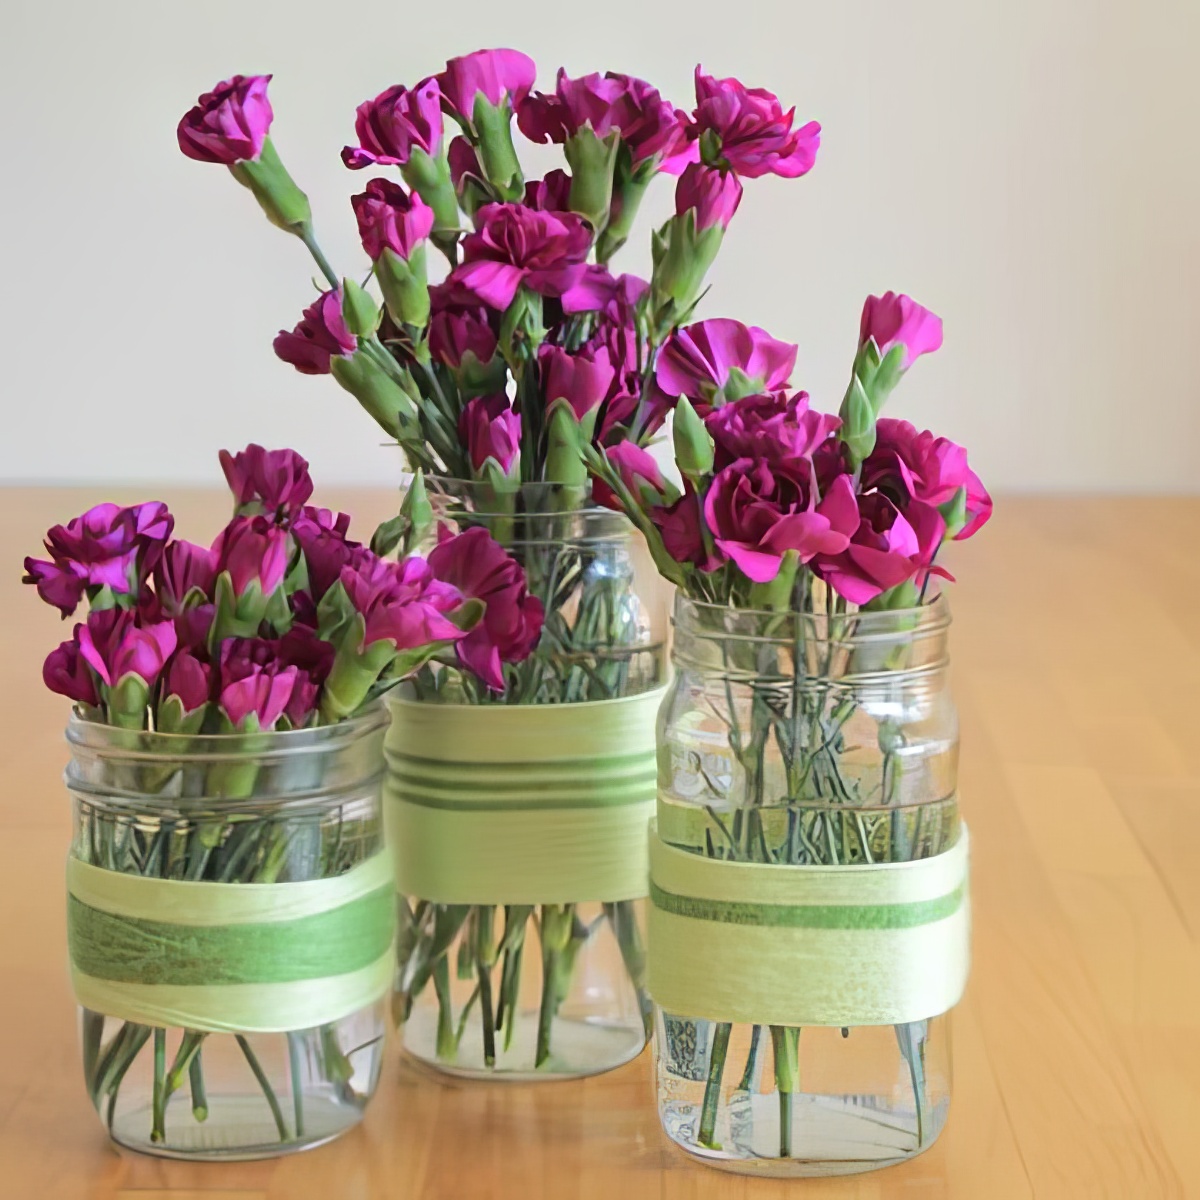 yarn-vases twine colorful twine and glass jars creative vase ideas